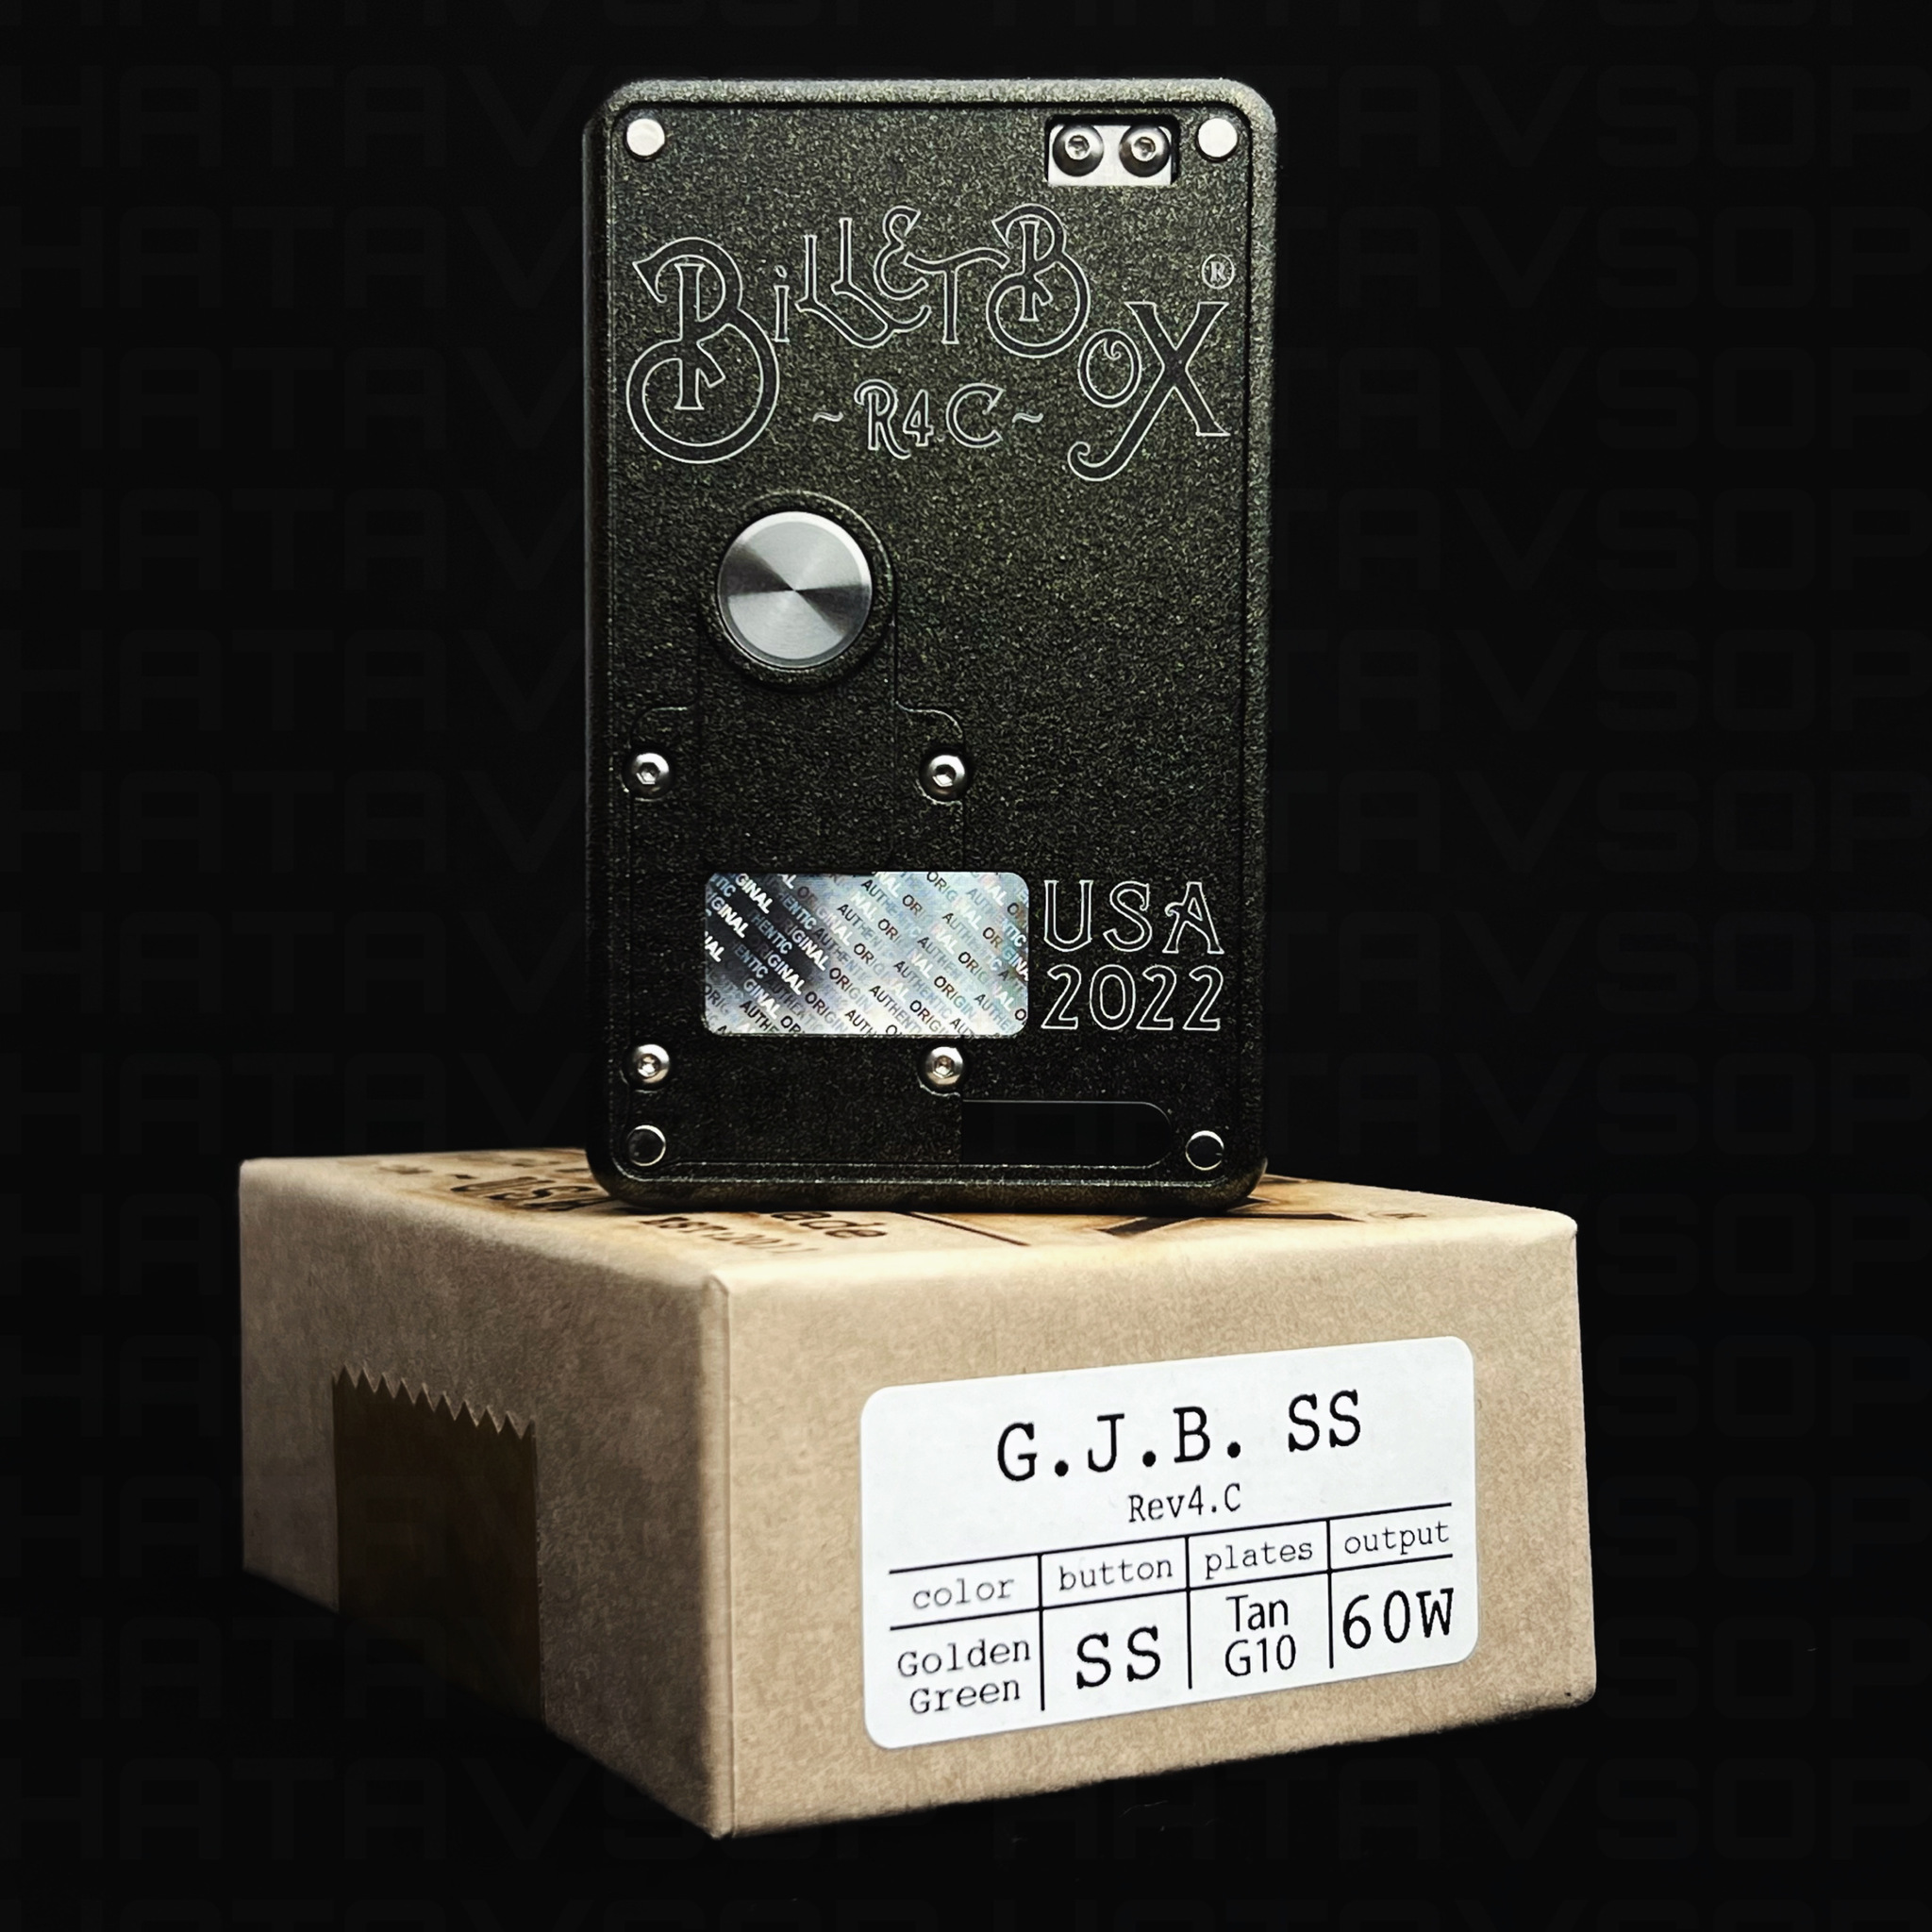 Billet Box G.J.B. SS by Billet Box Vapor | HATA V.S.O.P.